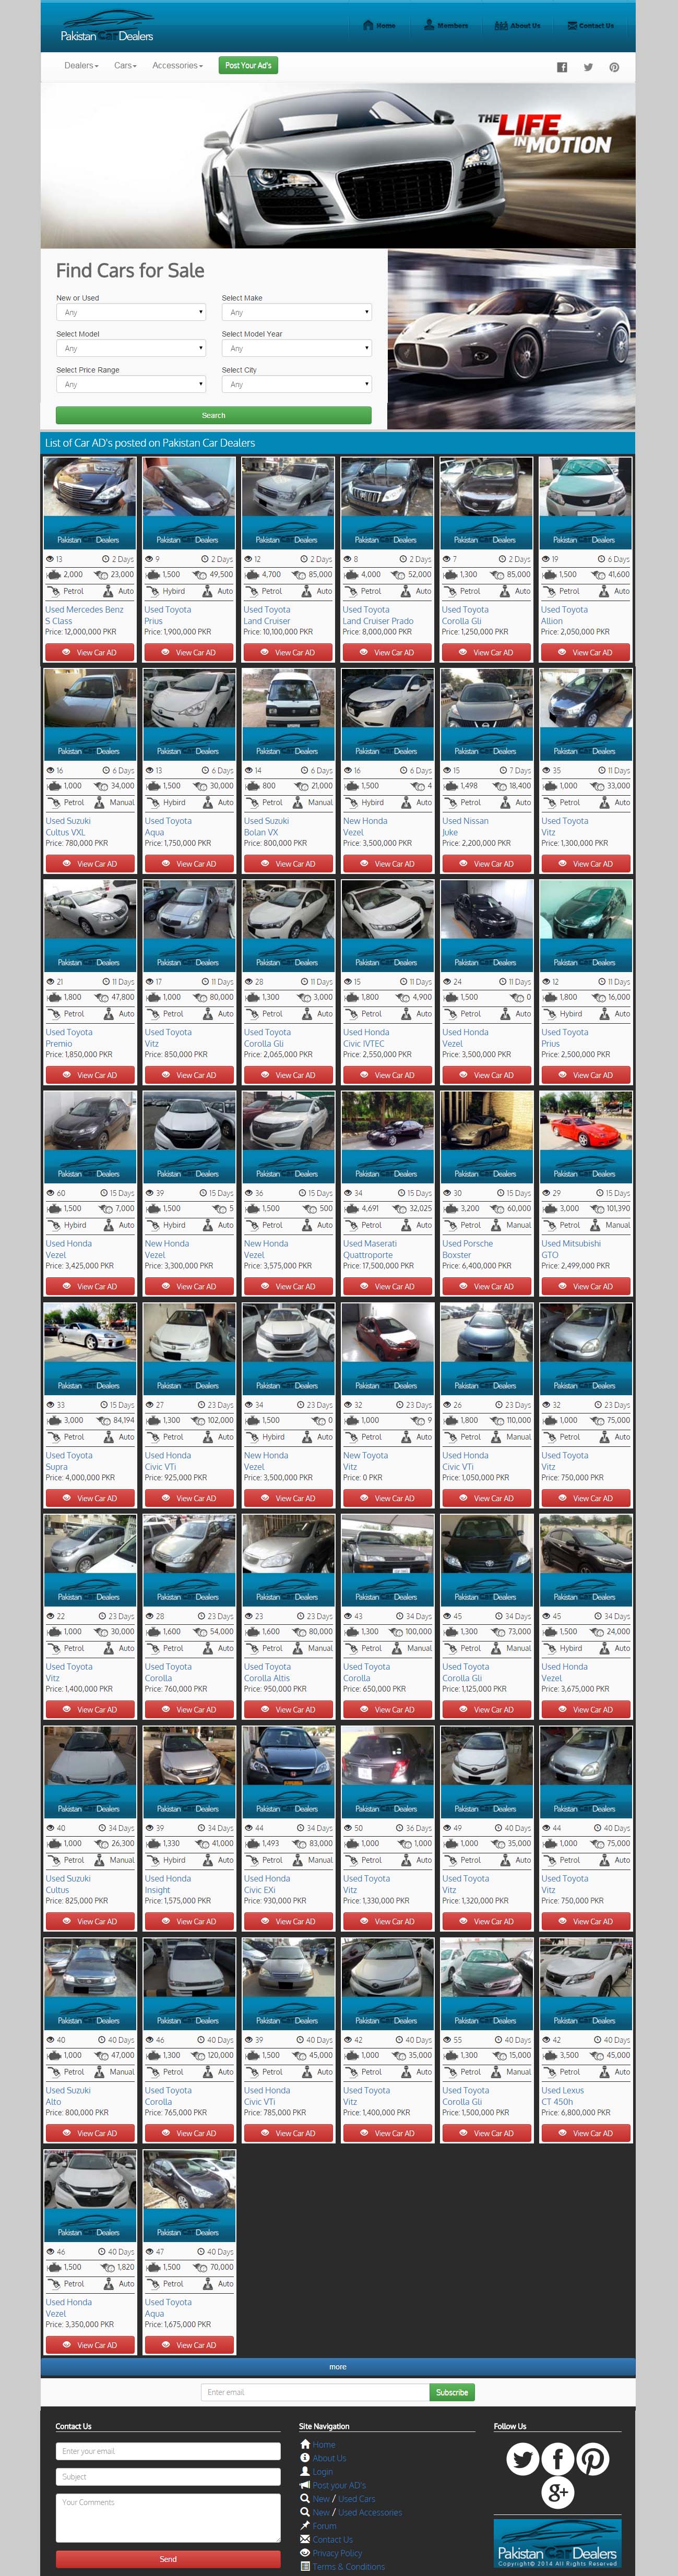 Pakistan Car Dealers Website Screenshot